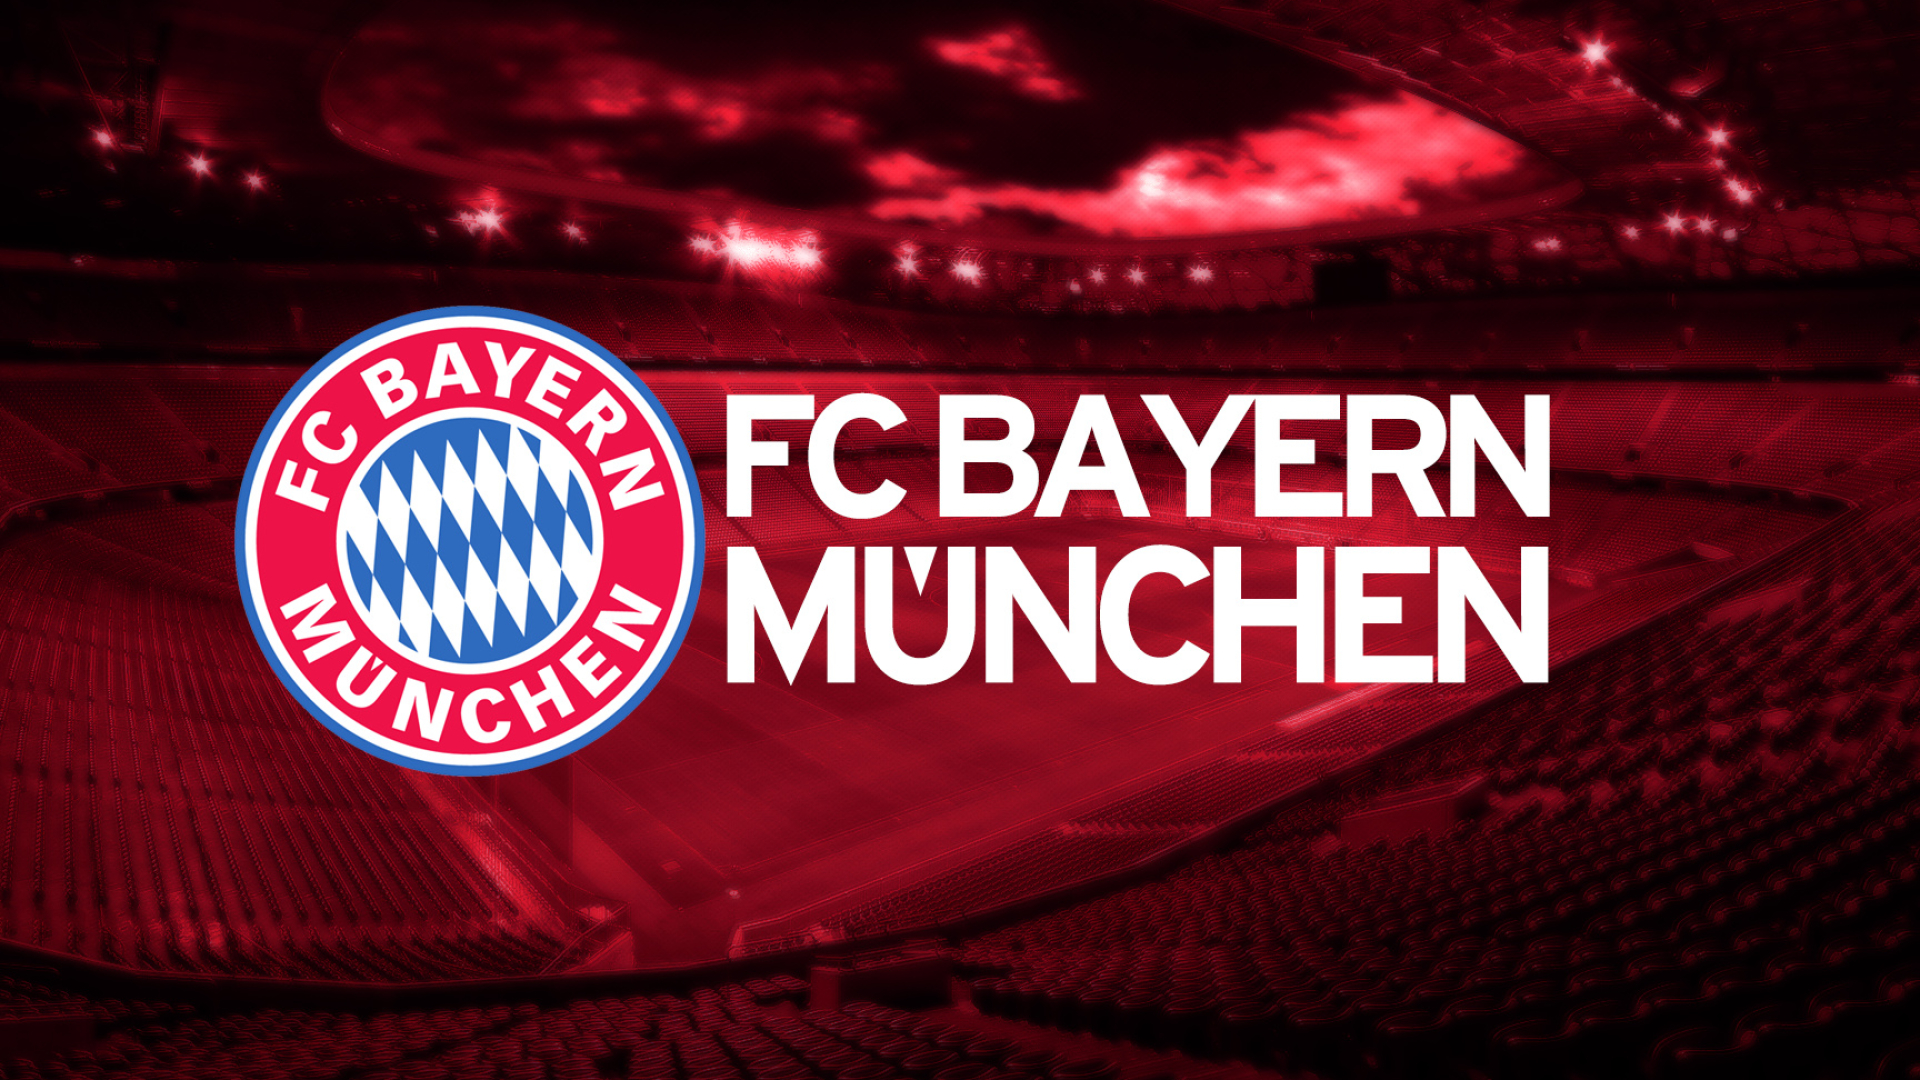 Bayern Munchen FC: Die Roten, The most successful club in German football history. 1920x1080 Full HD Wallpaper.